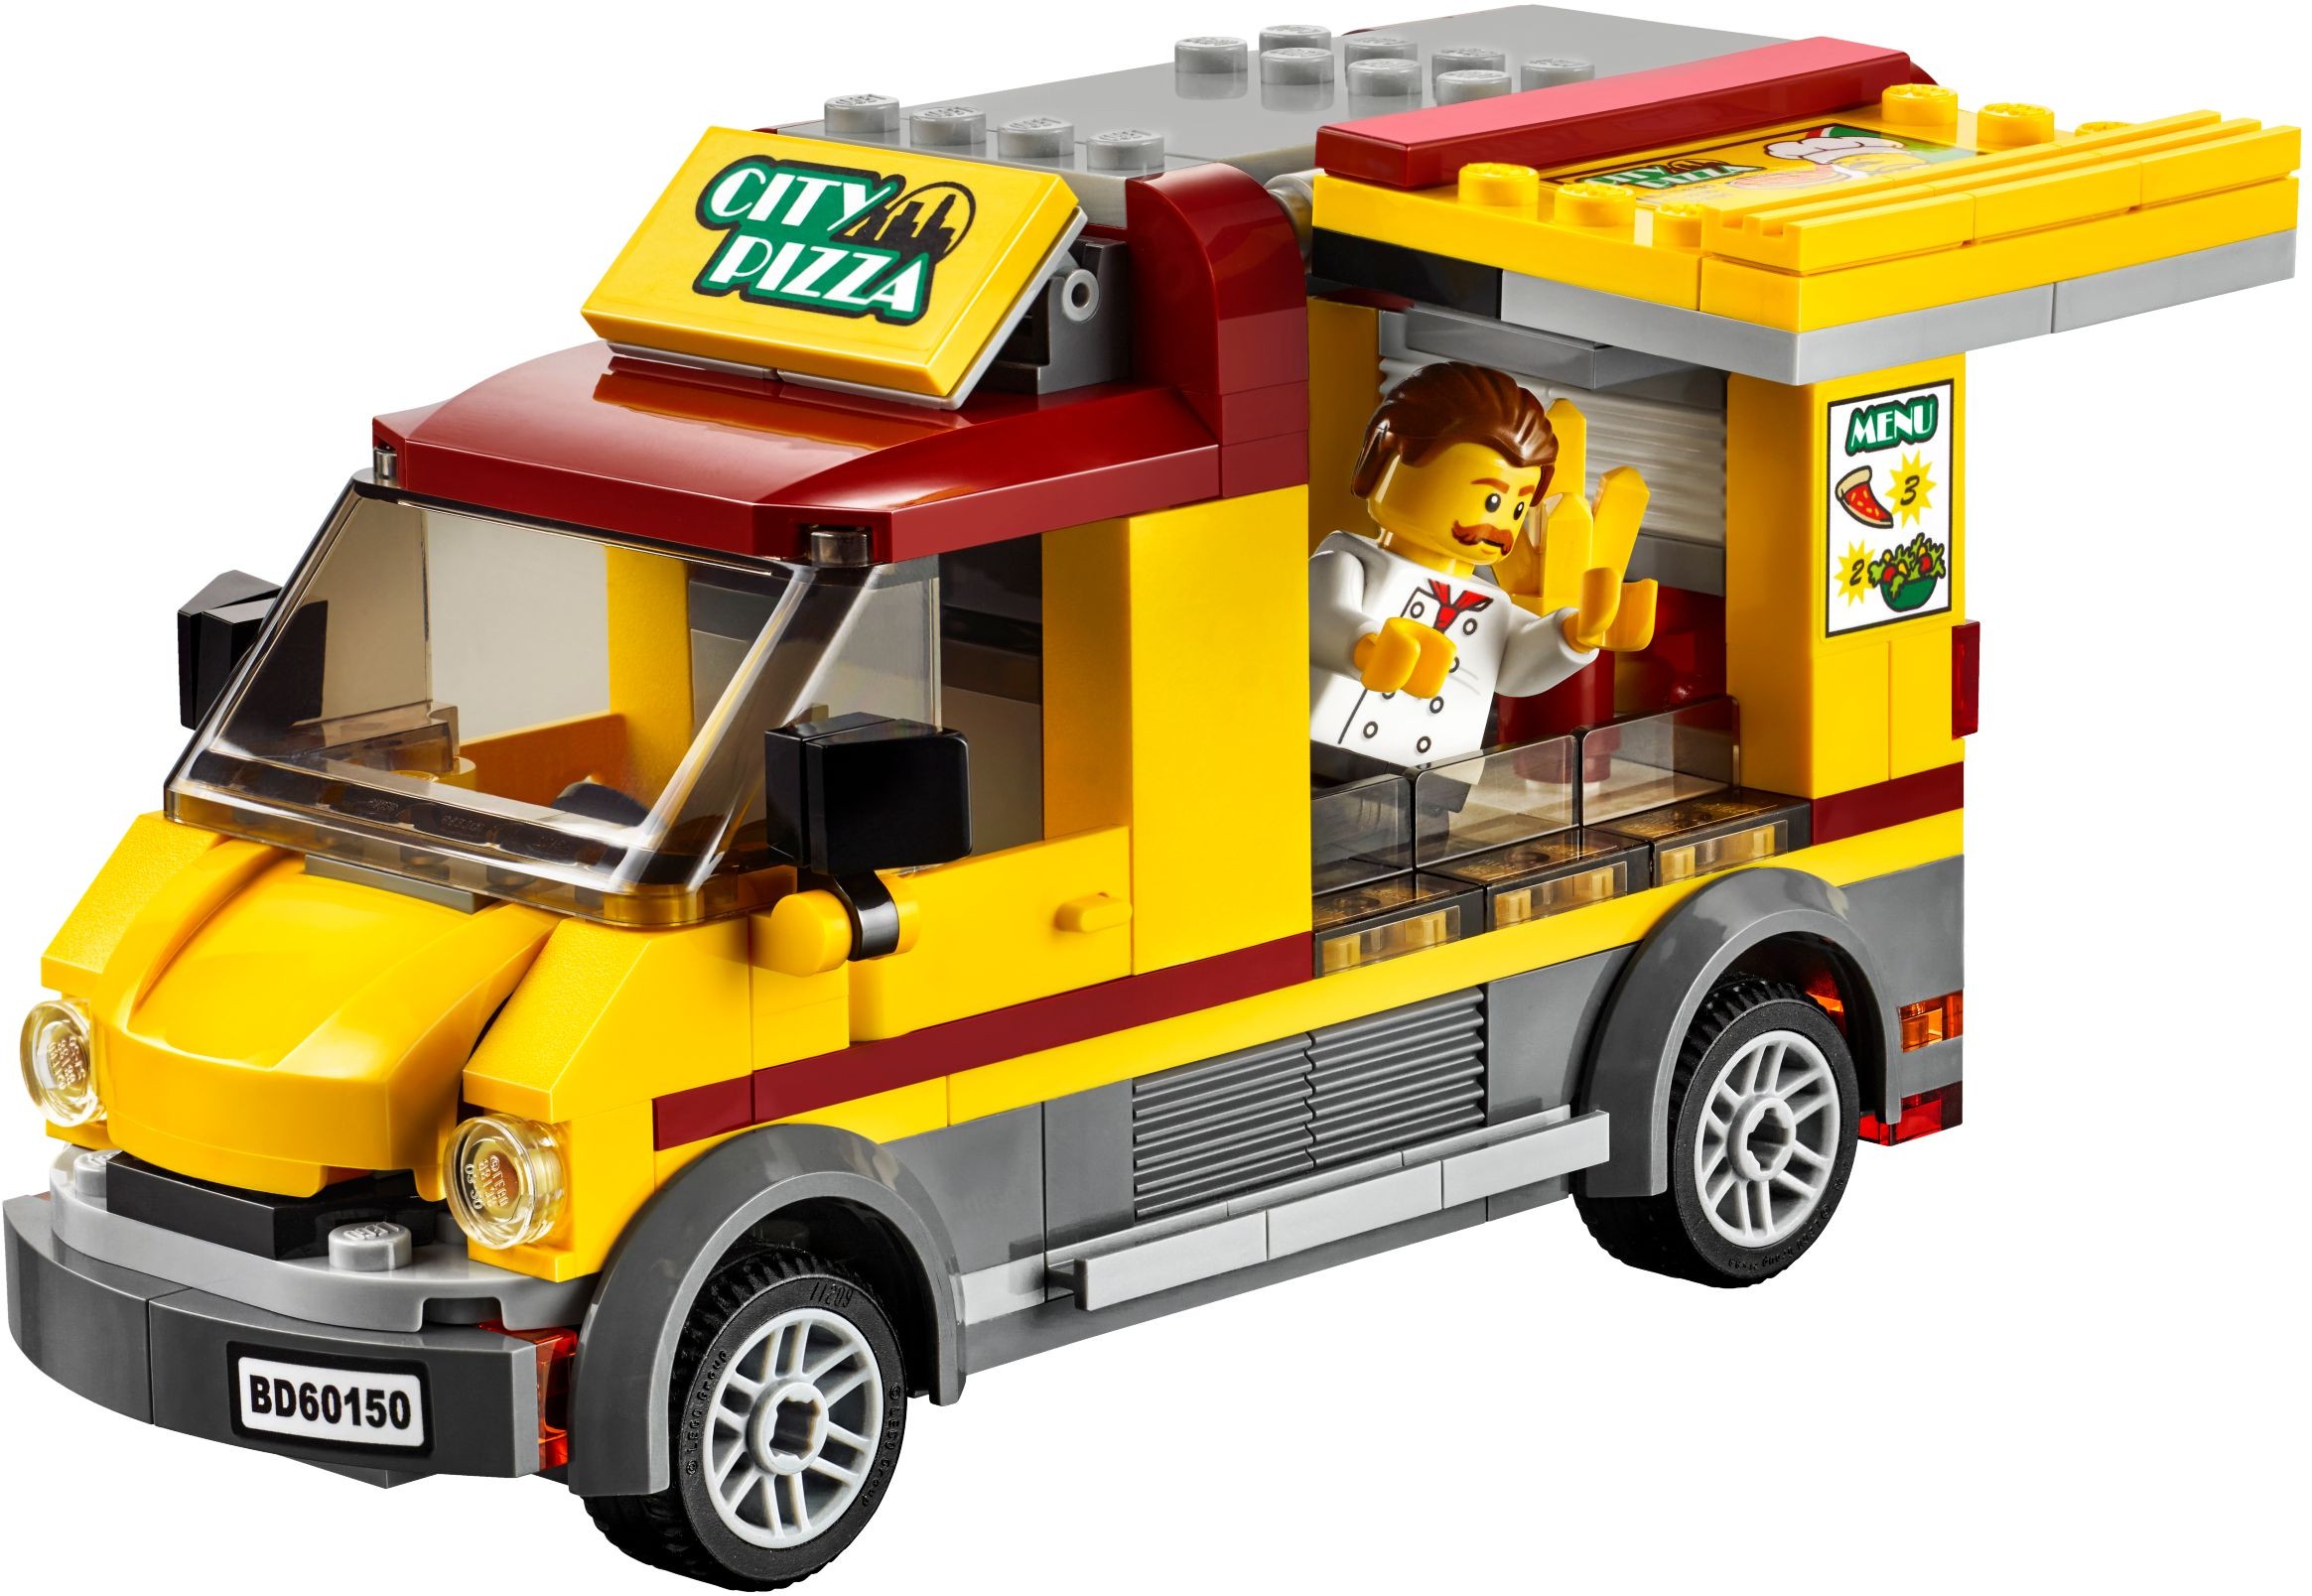 60150 LEGO City Great Vehicles Pizza Van